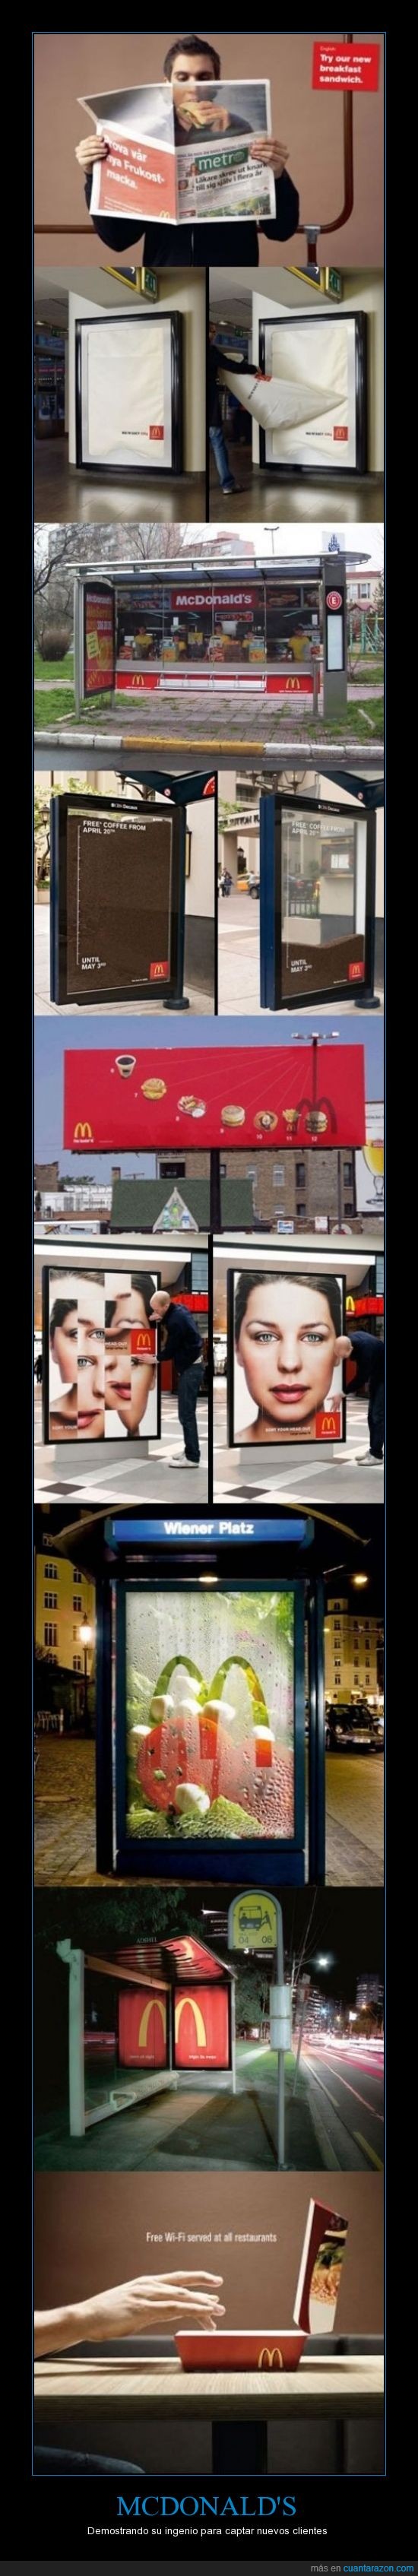 McDonald's,publicidad,WiFi,café